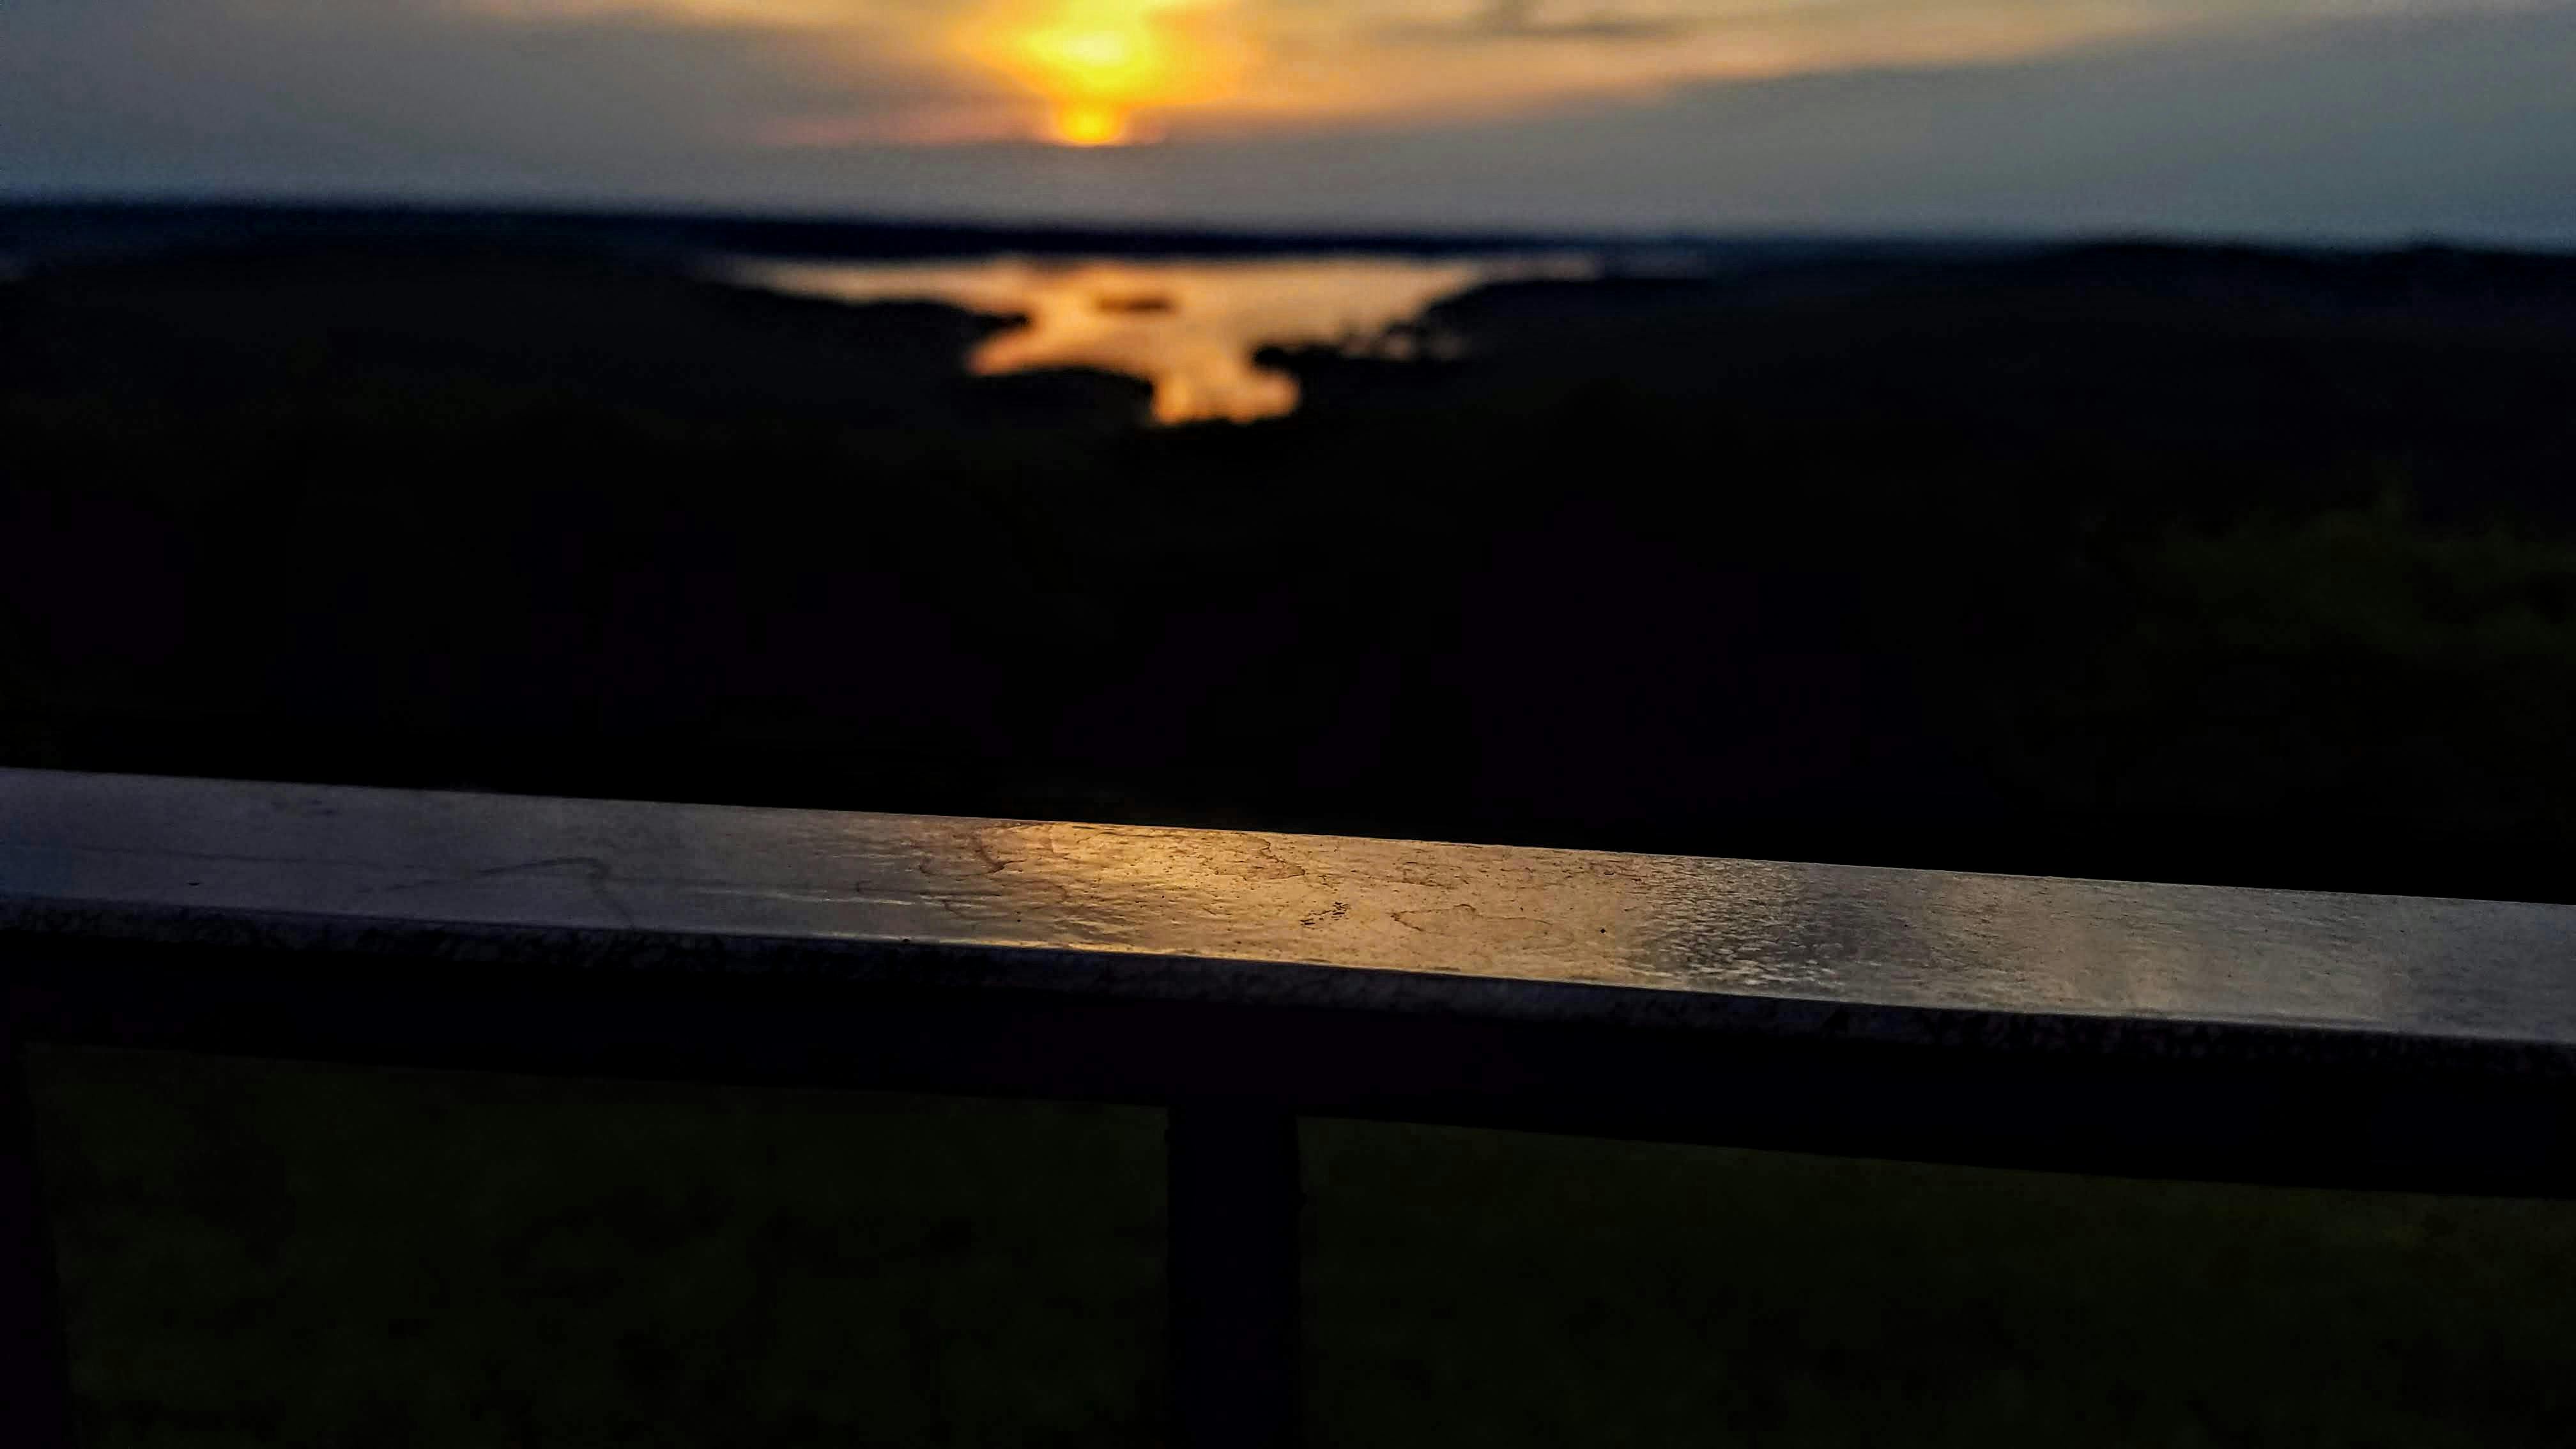 Free stock photo of #sun #light #sunset #photographer #night #fence